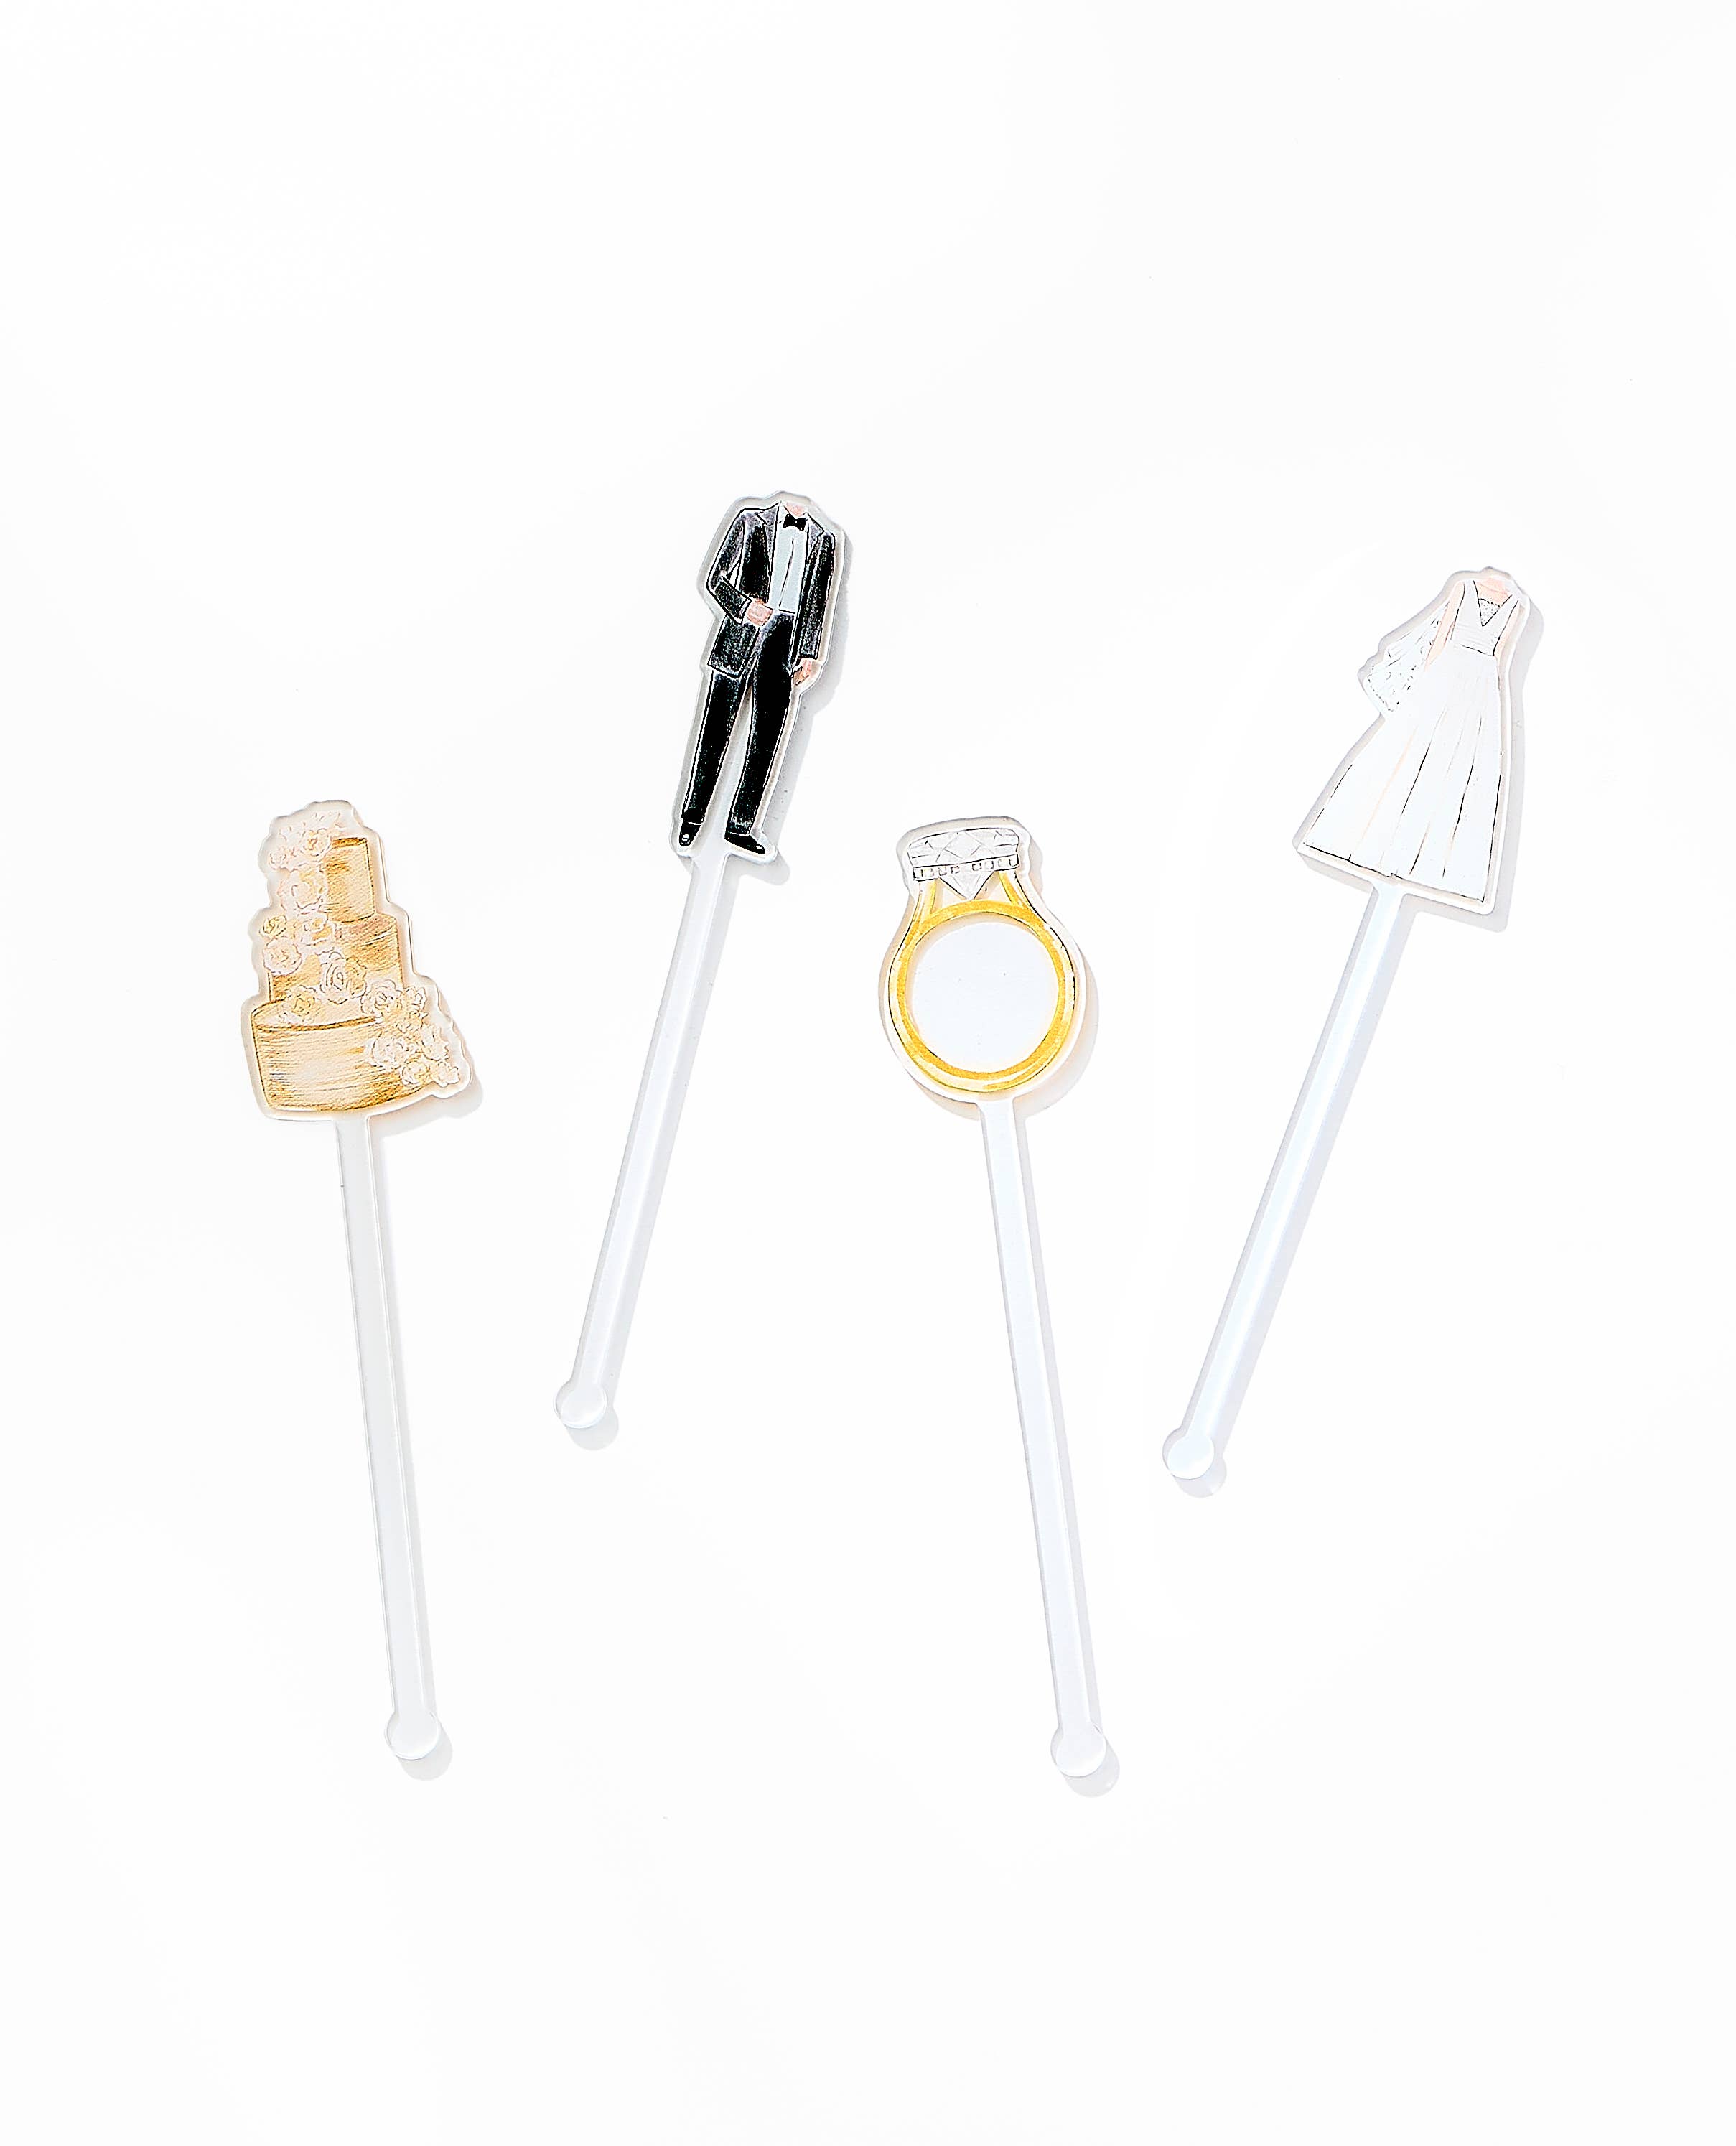 Wedding Icons Acrylic Stir Sticks